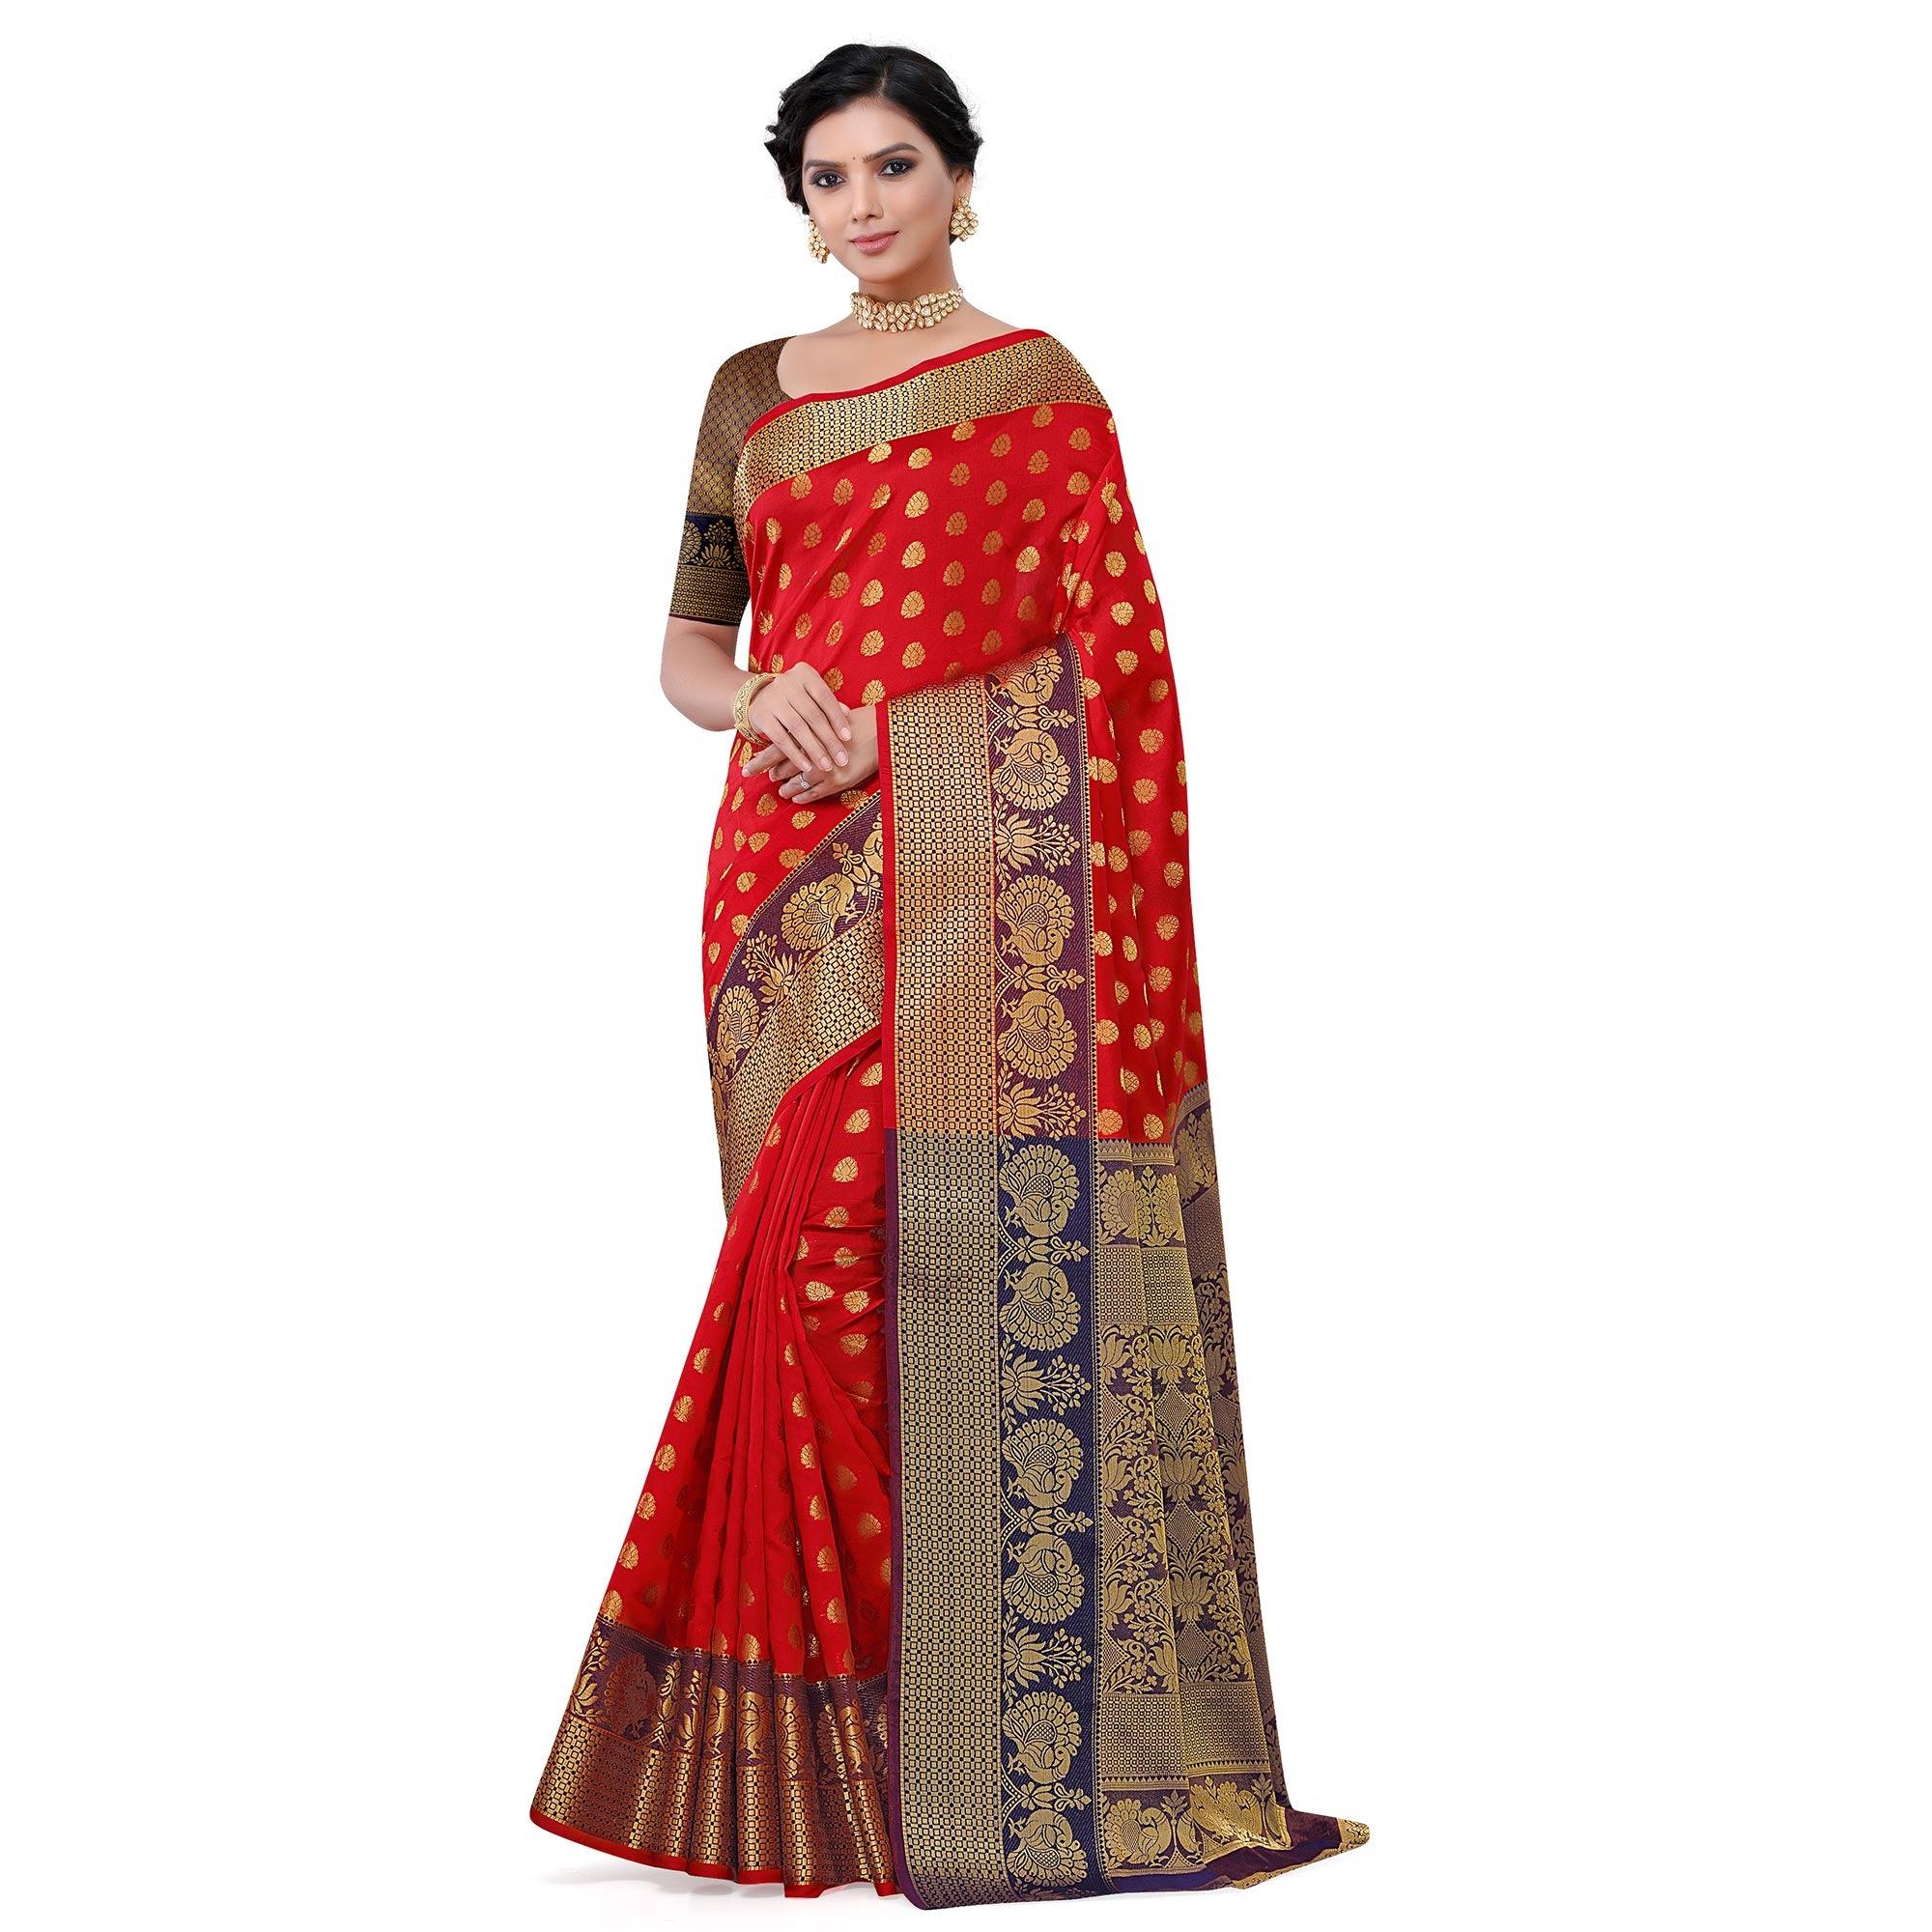 Breathtaking Red Colored Festive Wear Woven Kota Art Silk Banarasi Saree - Peachmode